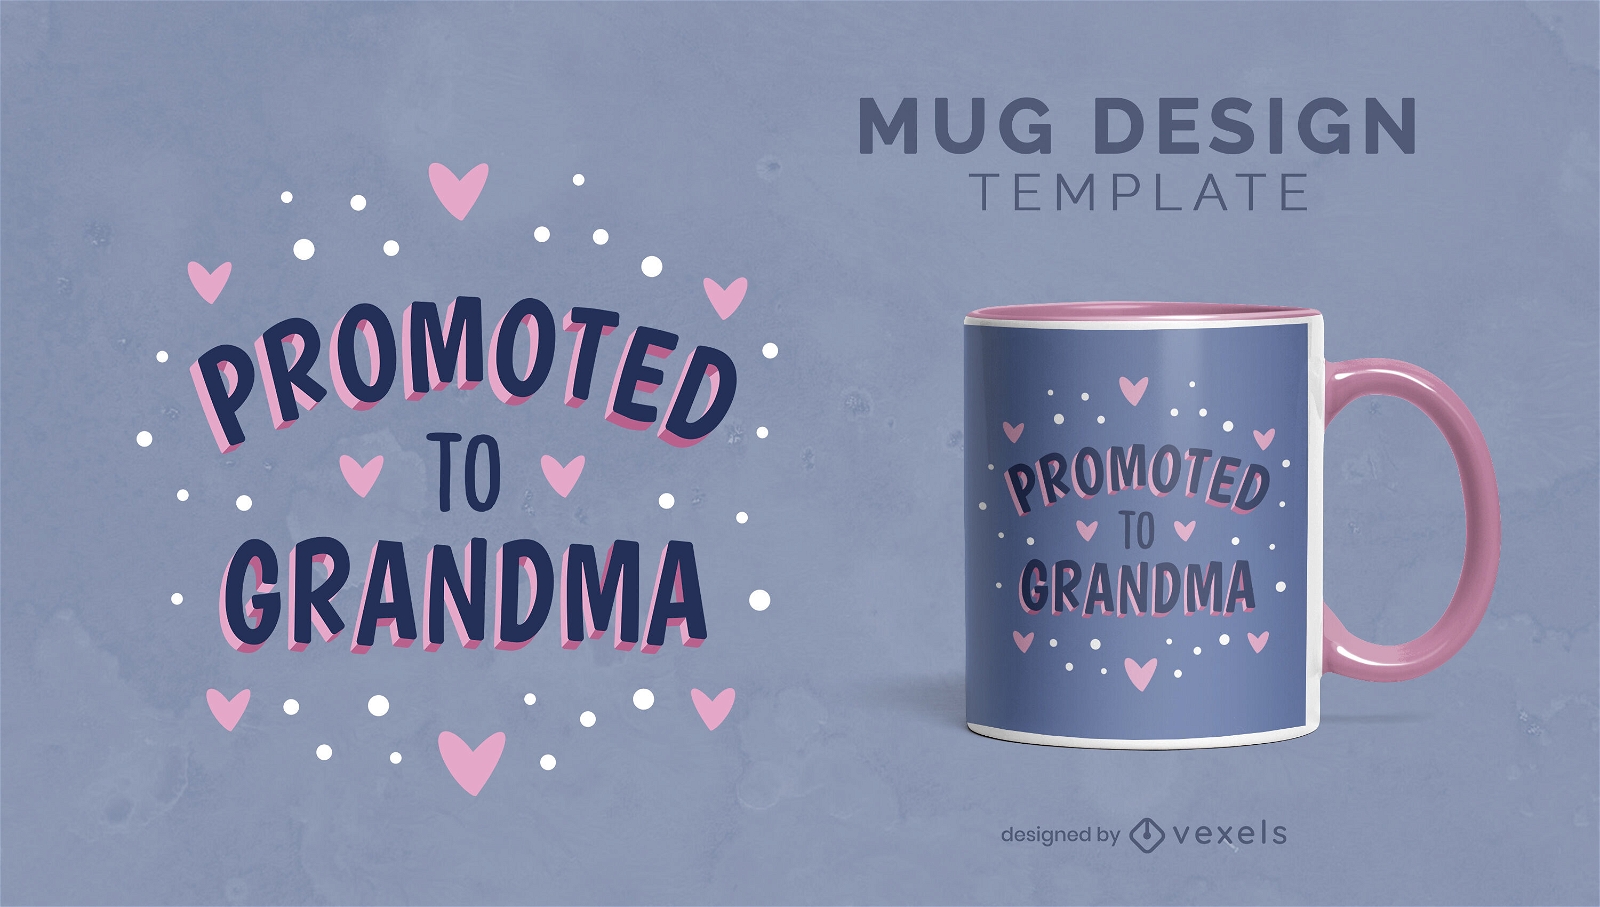 Promoted to grandma quote mug design